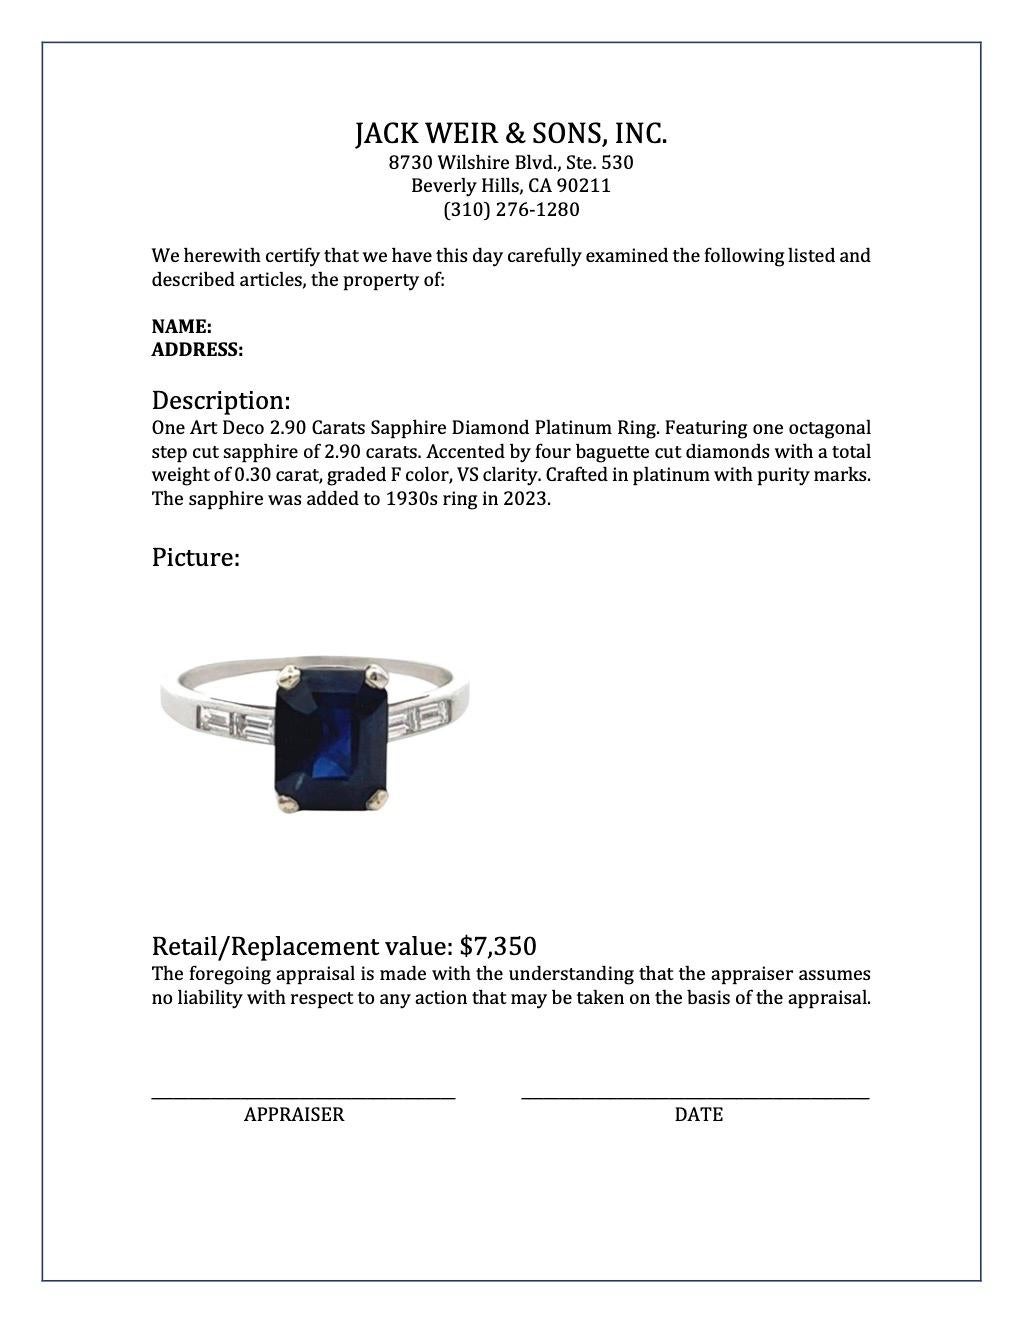 Art Deco 2.90 Carats Sapphire Diamond Platinum Ring 2